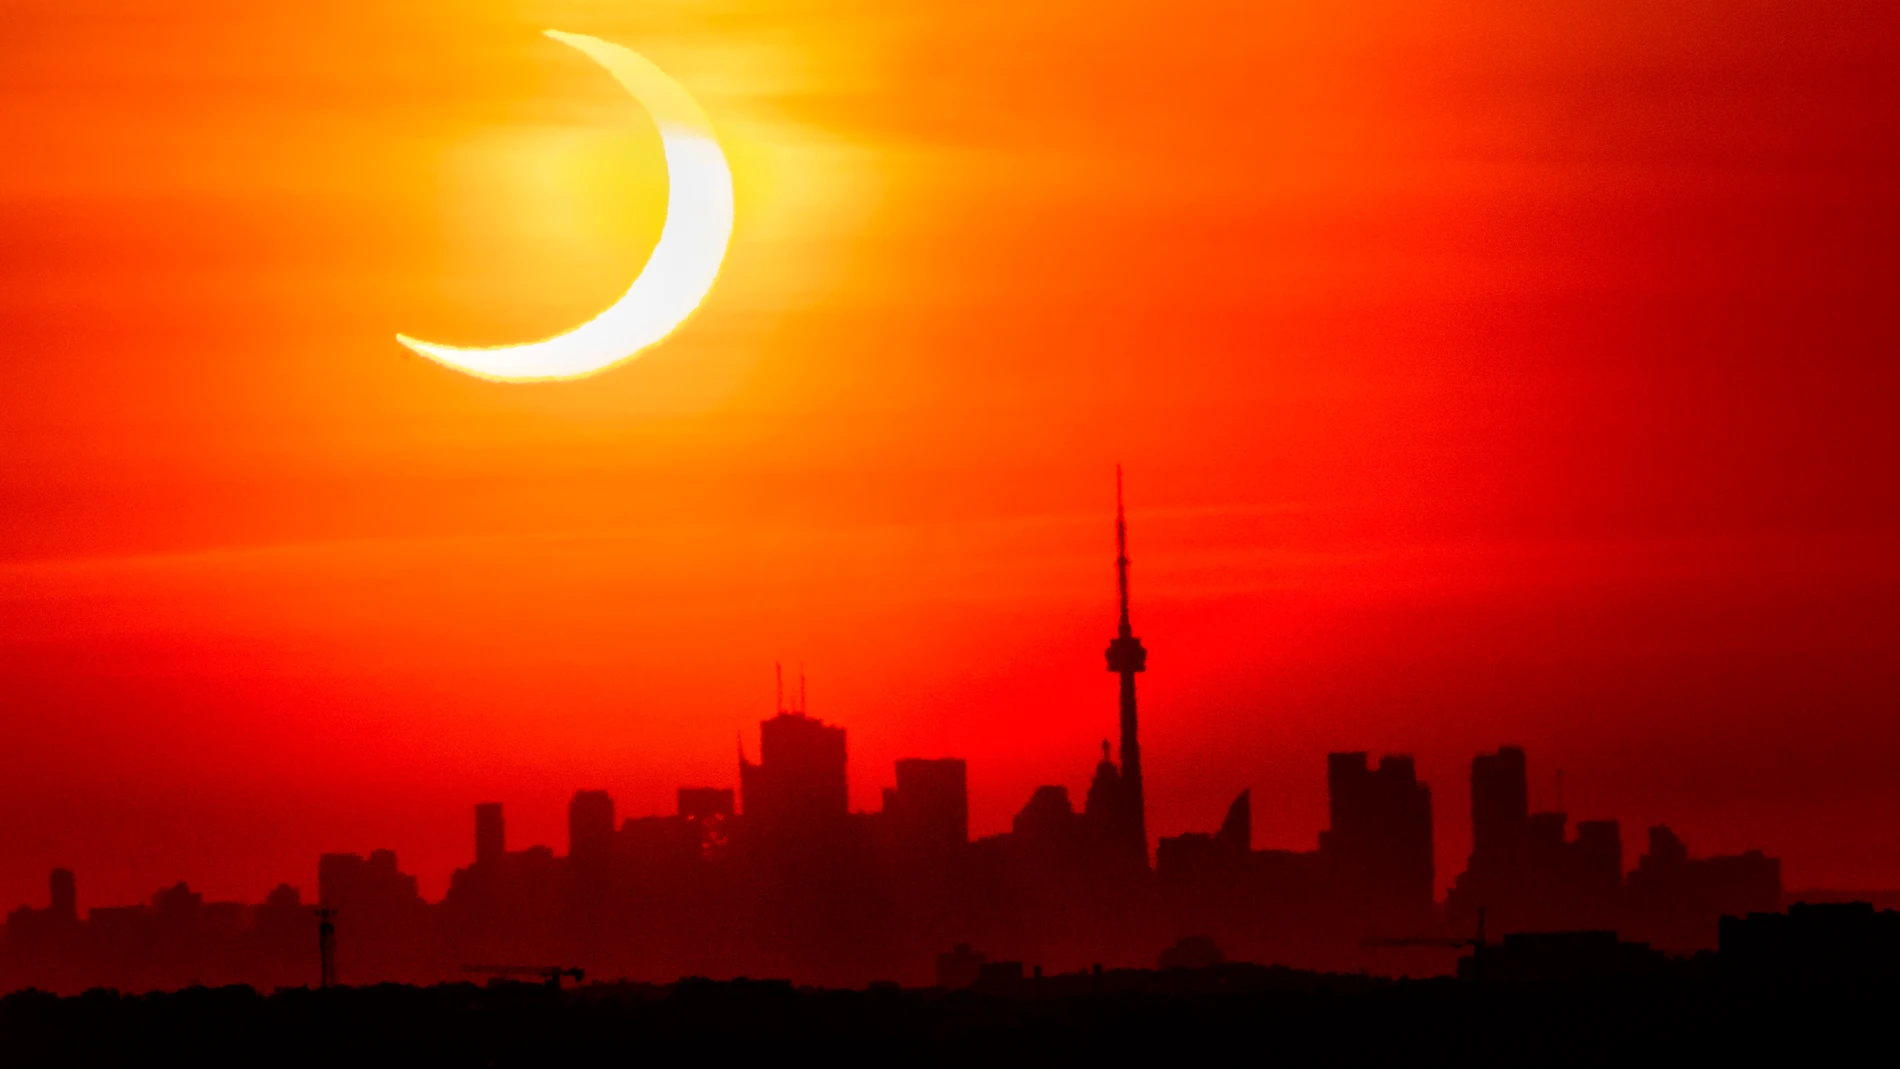 FILED - 10 June 2021, Canada, Toronto: A partial solar eclipse rises over the skyline of Toronto. Photo: Frank Gunn/The Canadian Press via ZUMA/dpaFrank Gunn/The Canadian Press vi / DPA10/06/2021 ONLY FOR USE IN SPAIN